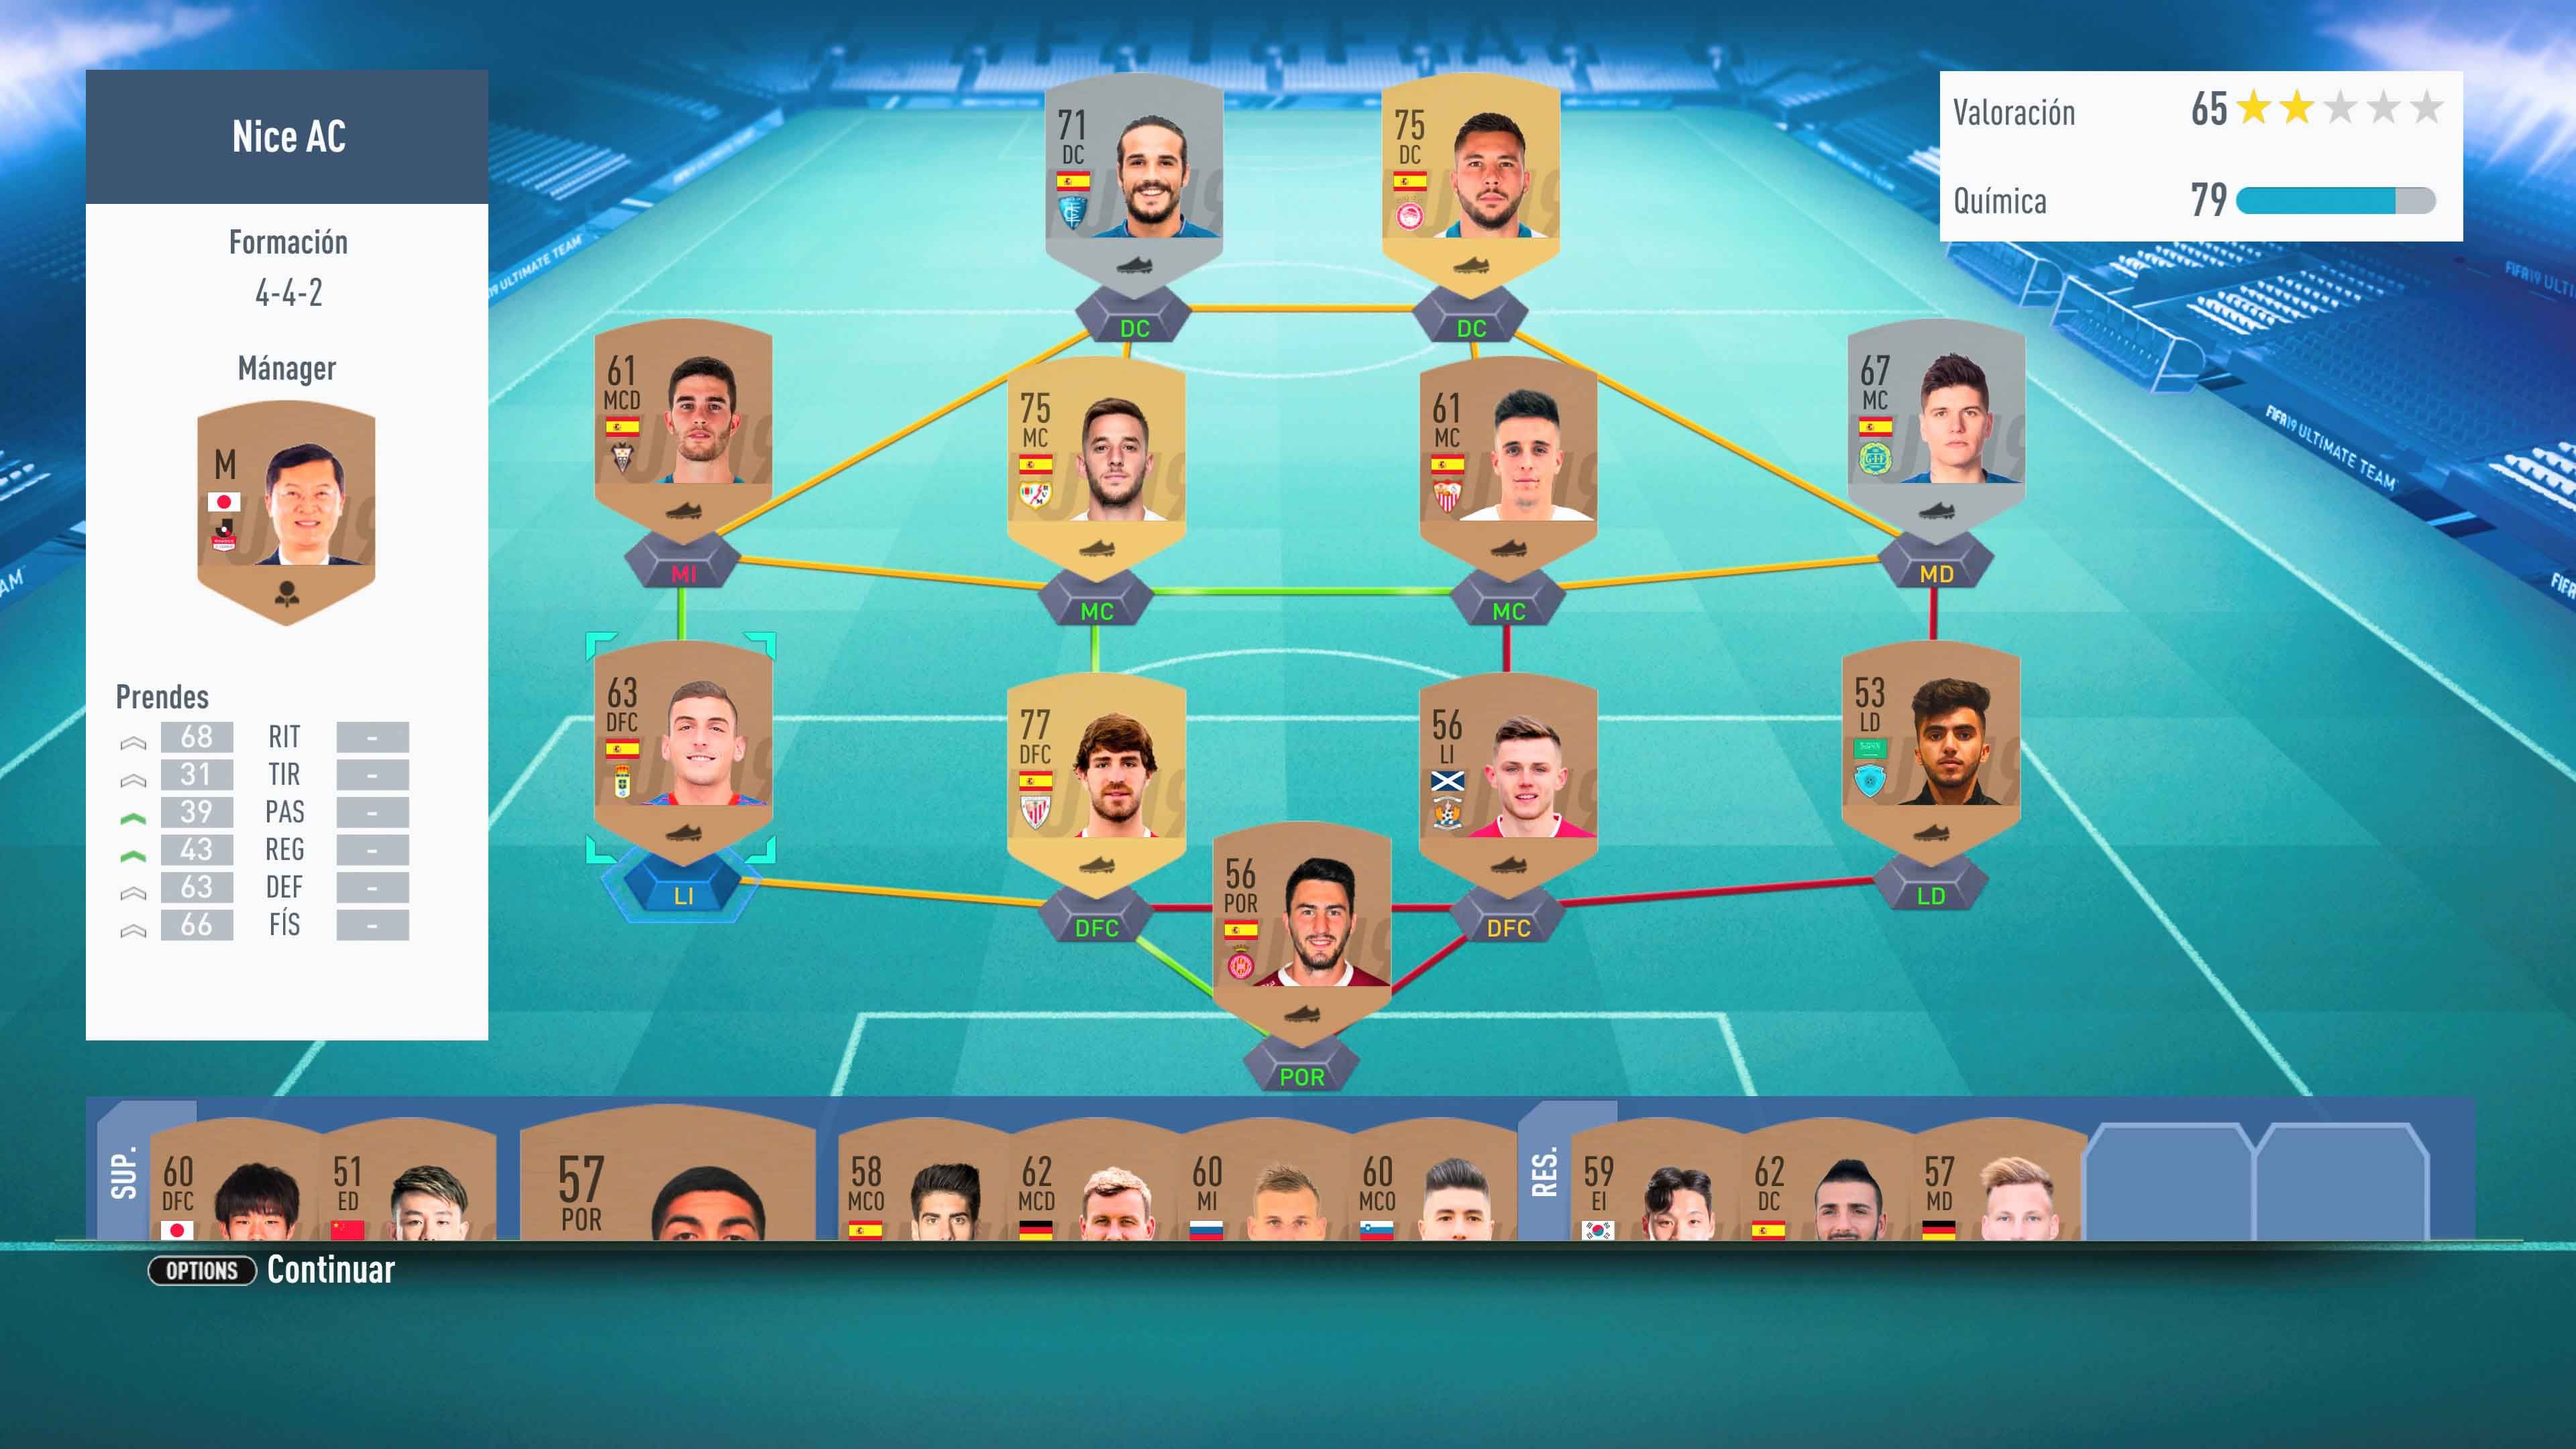 FIFA 19 Ultimate Team